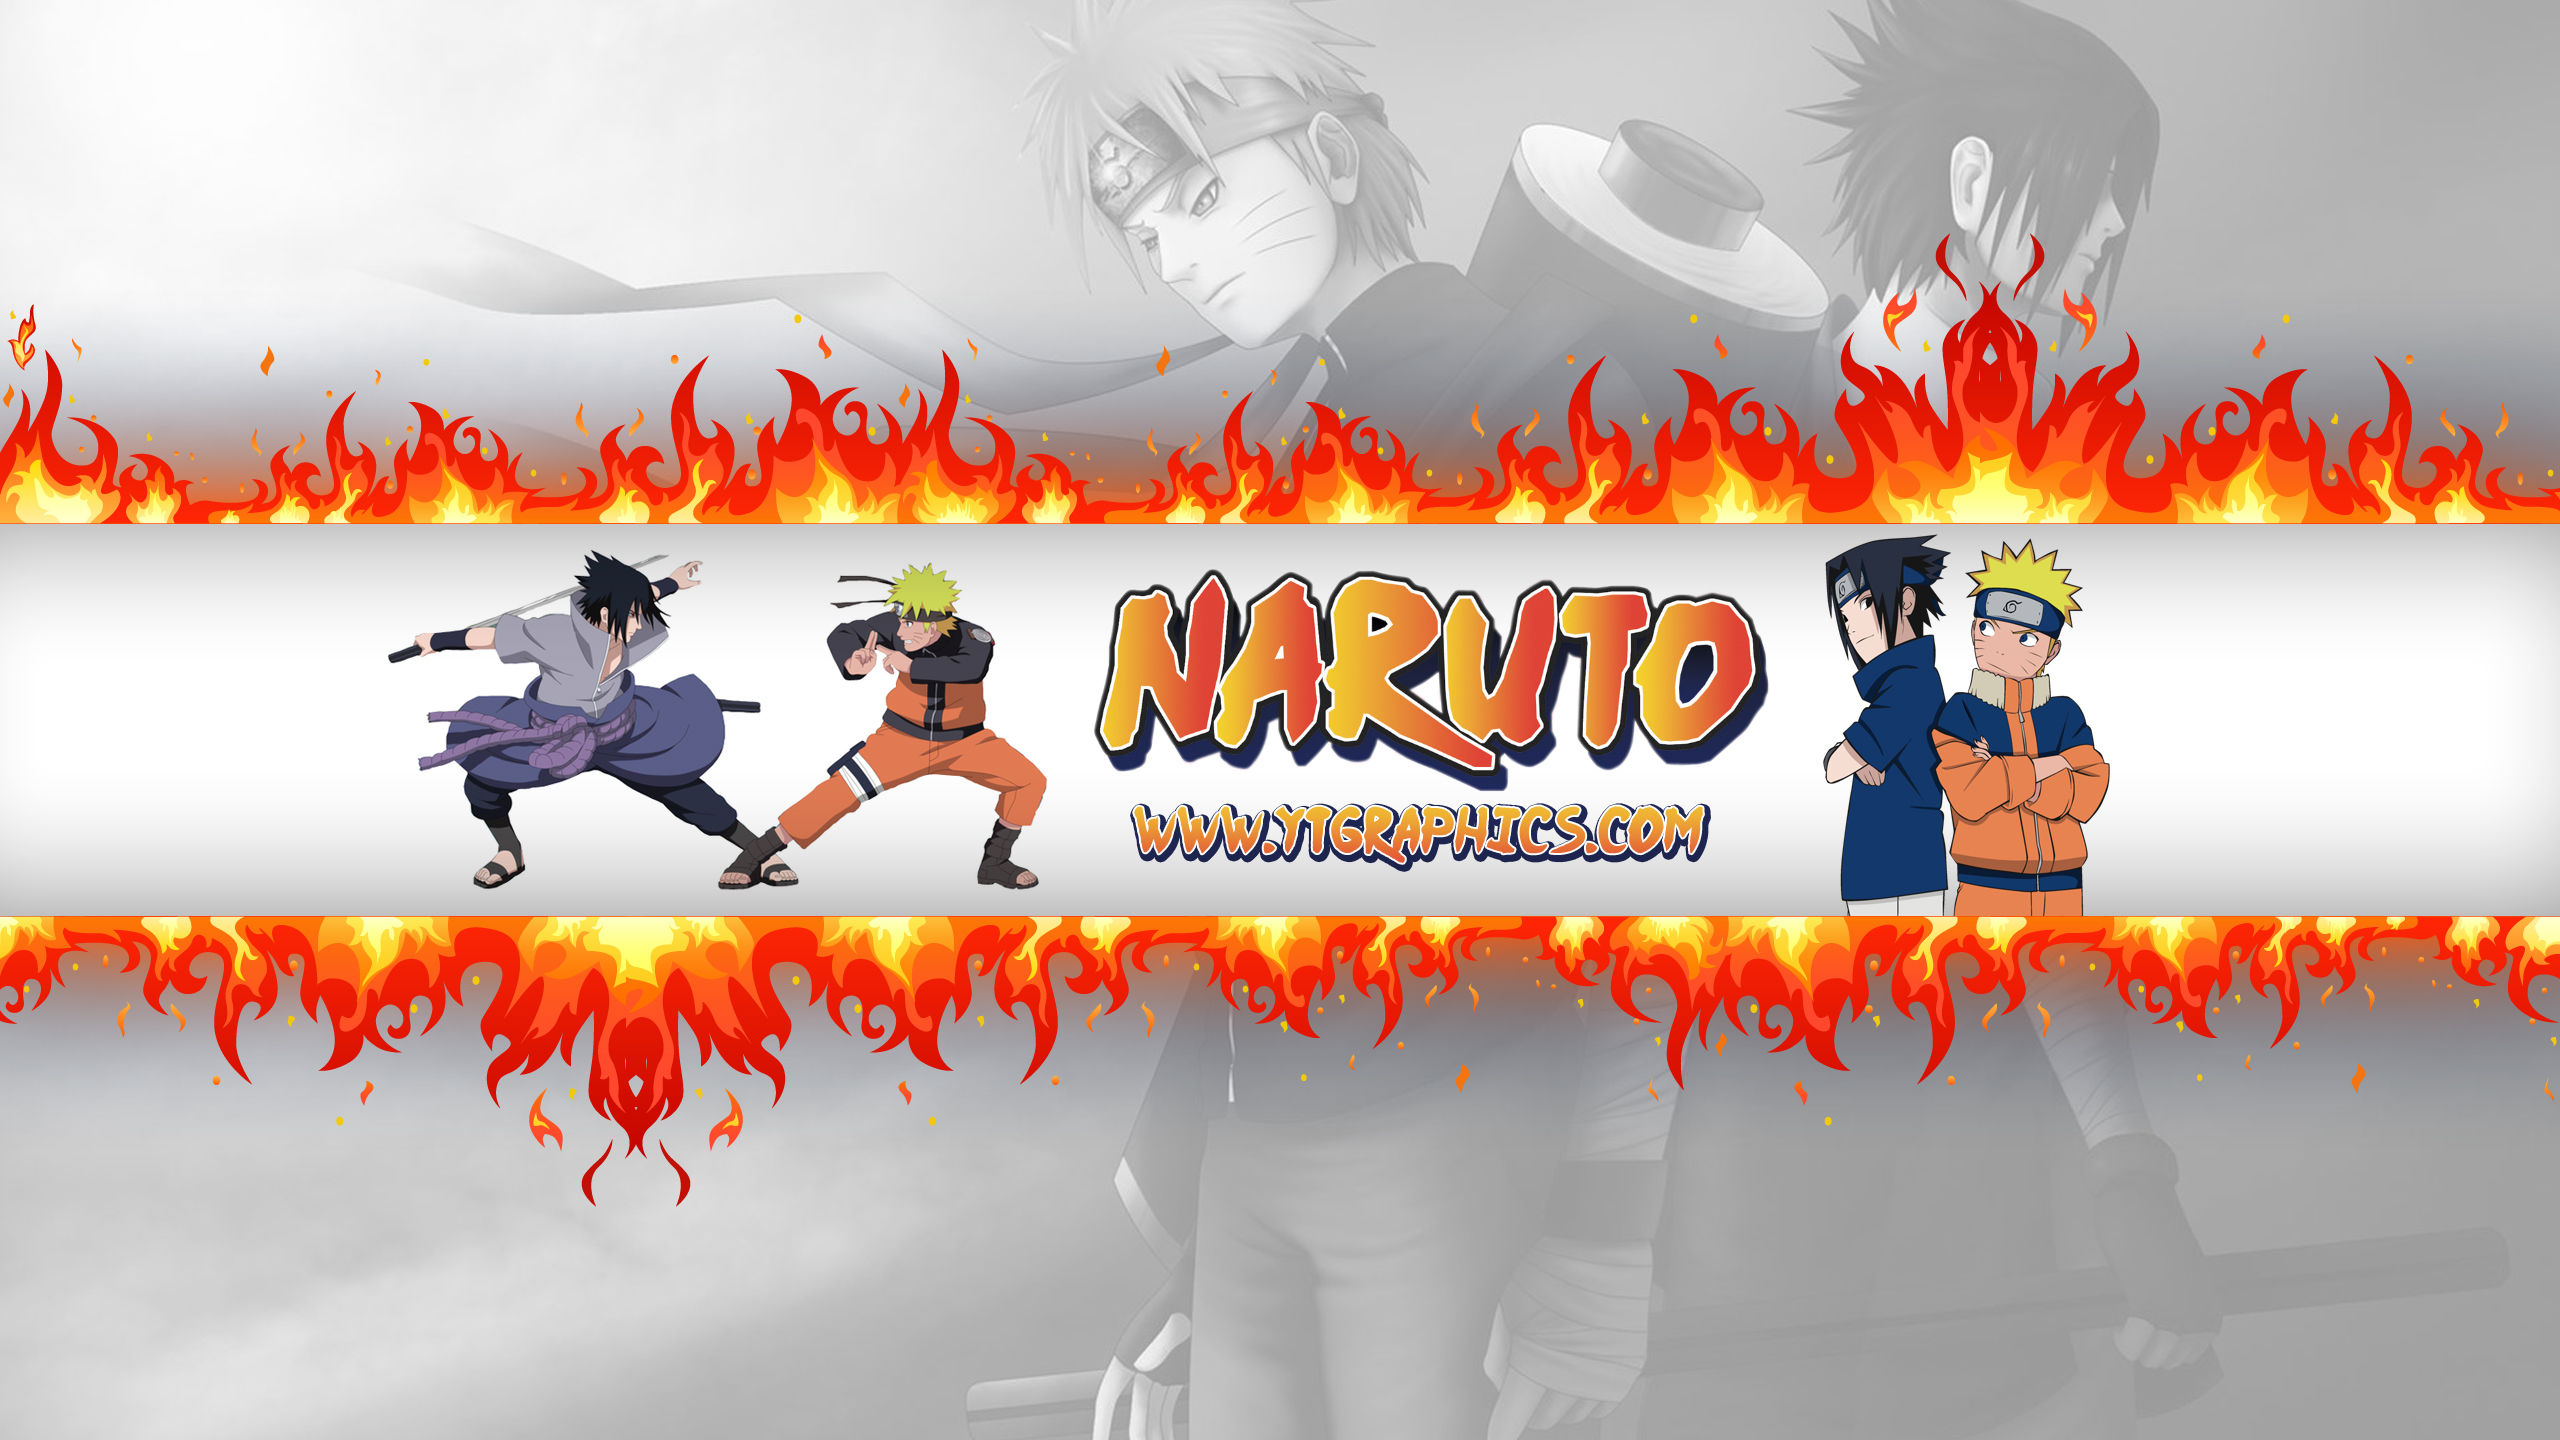 Naruto & Sasuke - YouTube Channel Art Banners